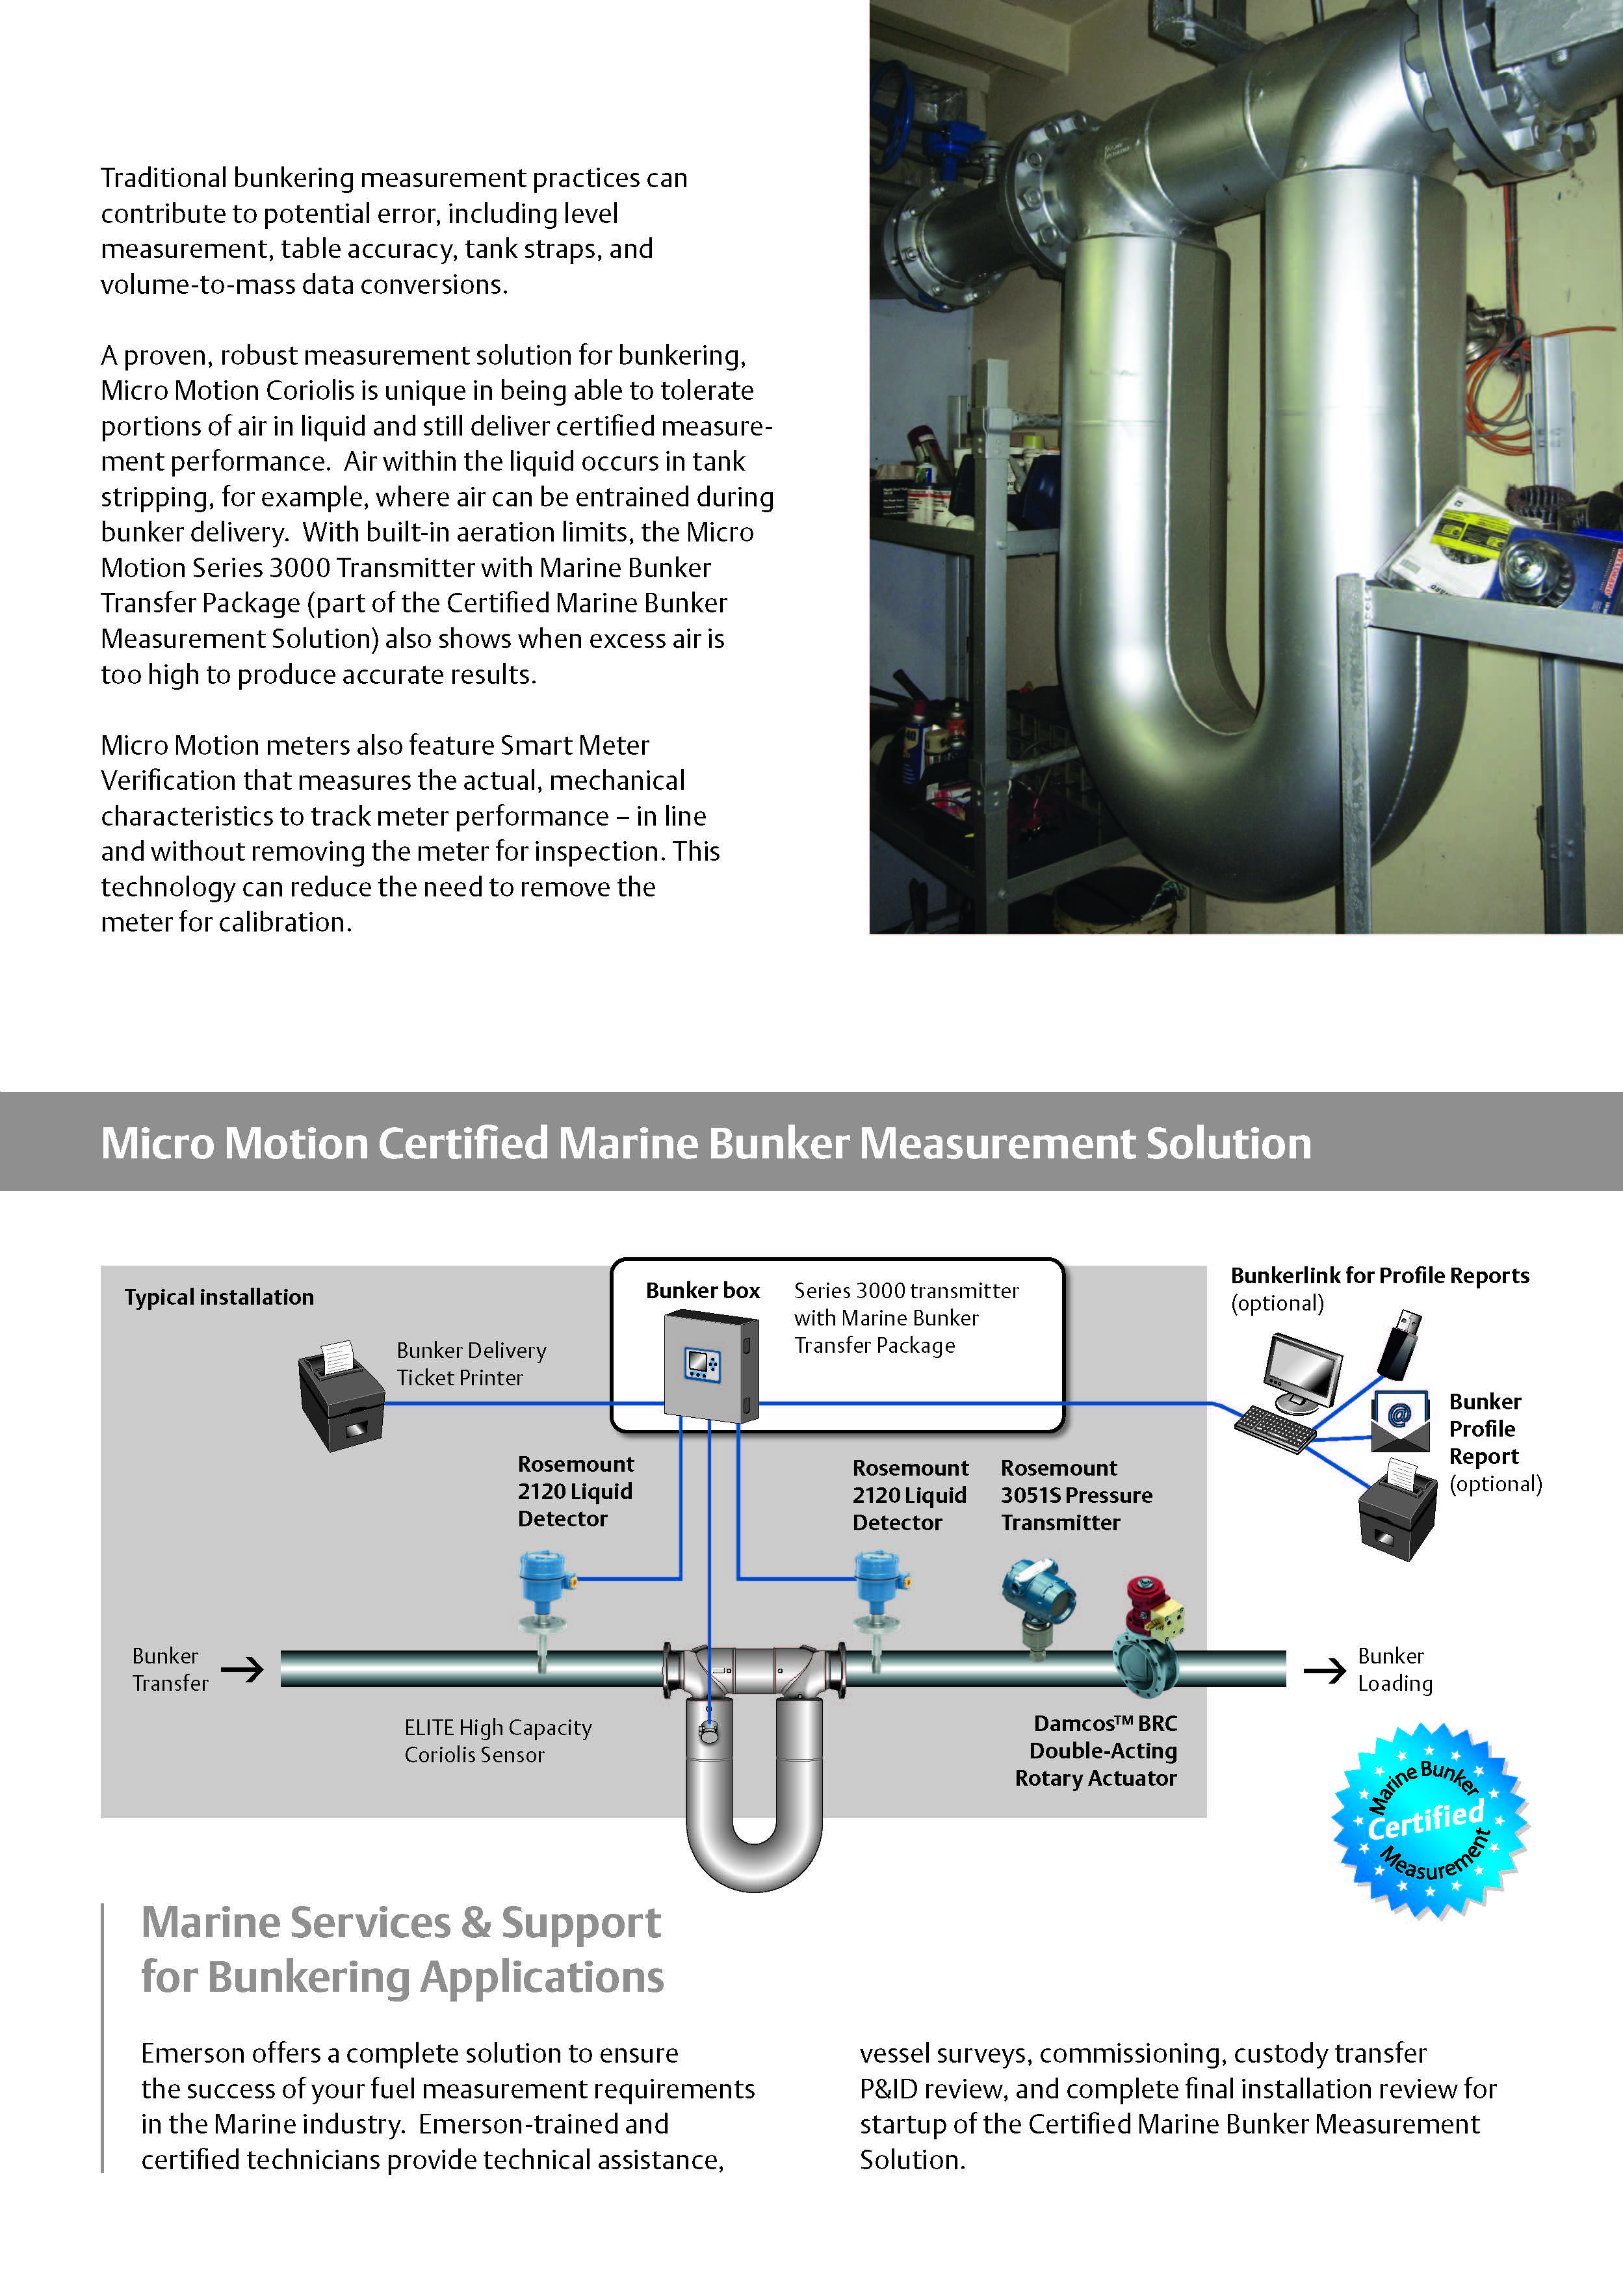 Marine Bunker Measurement Solutions